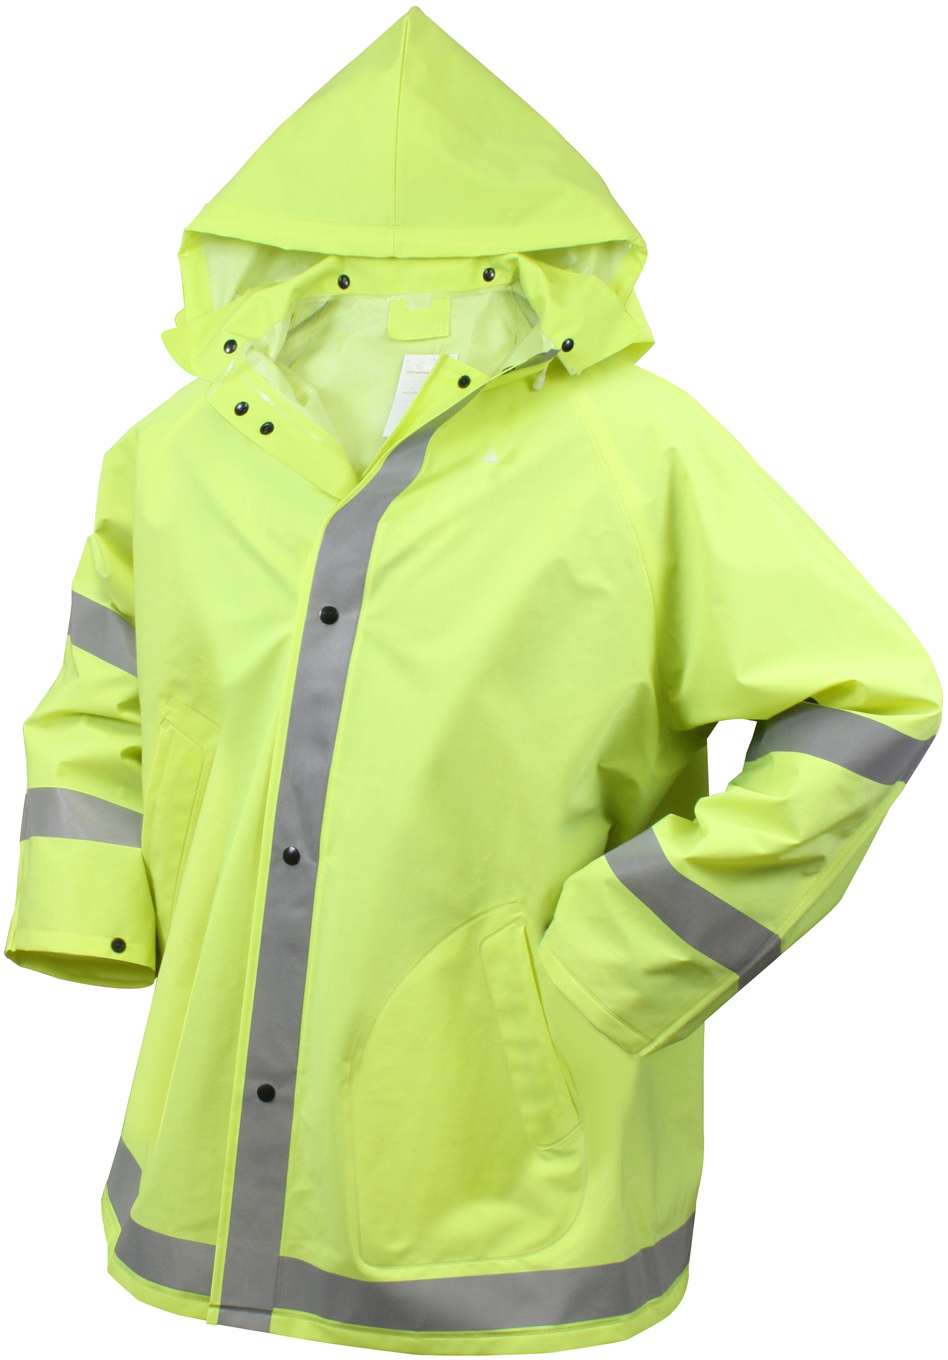 Rothco Safety Green Reflective Rain Jacket